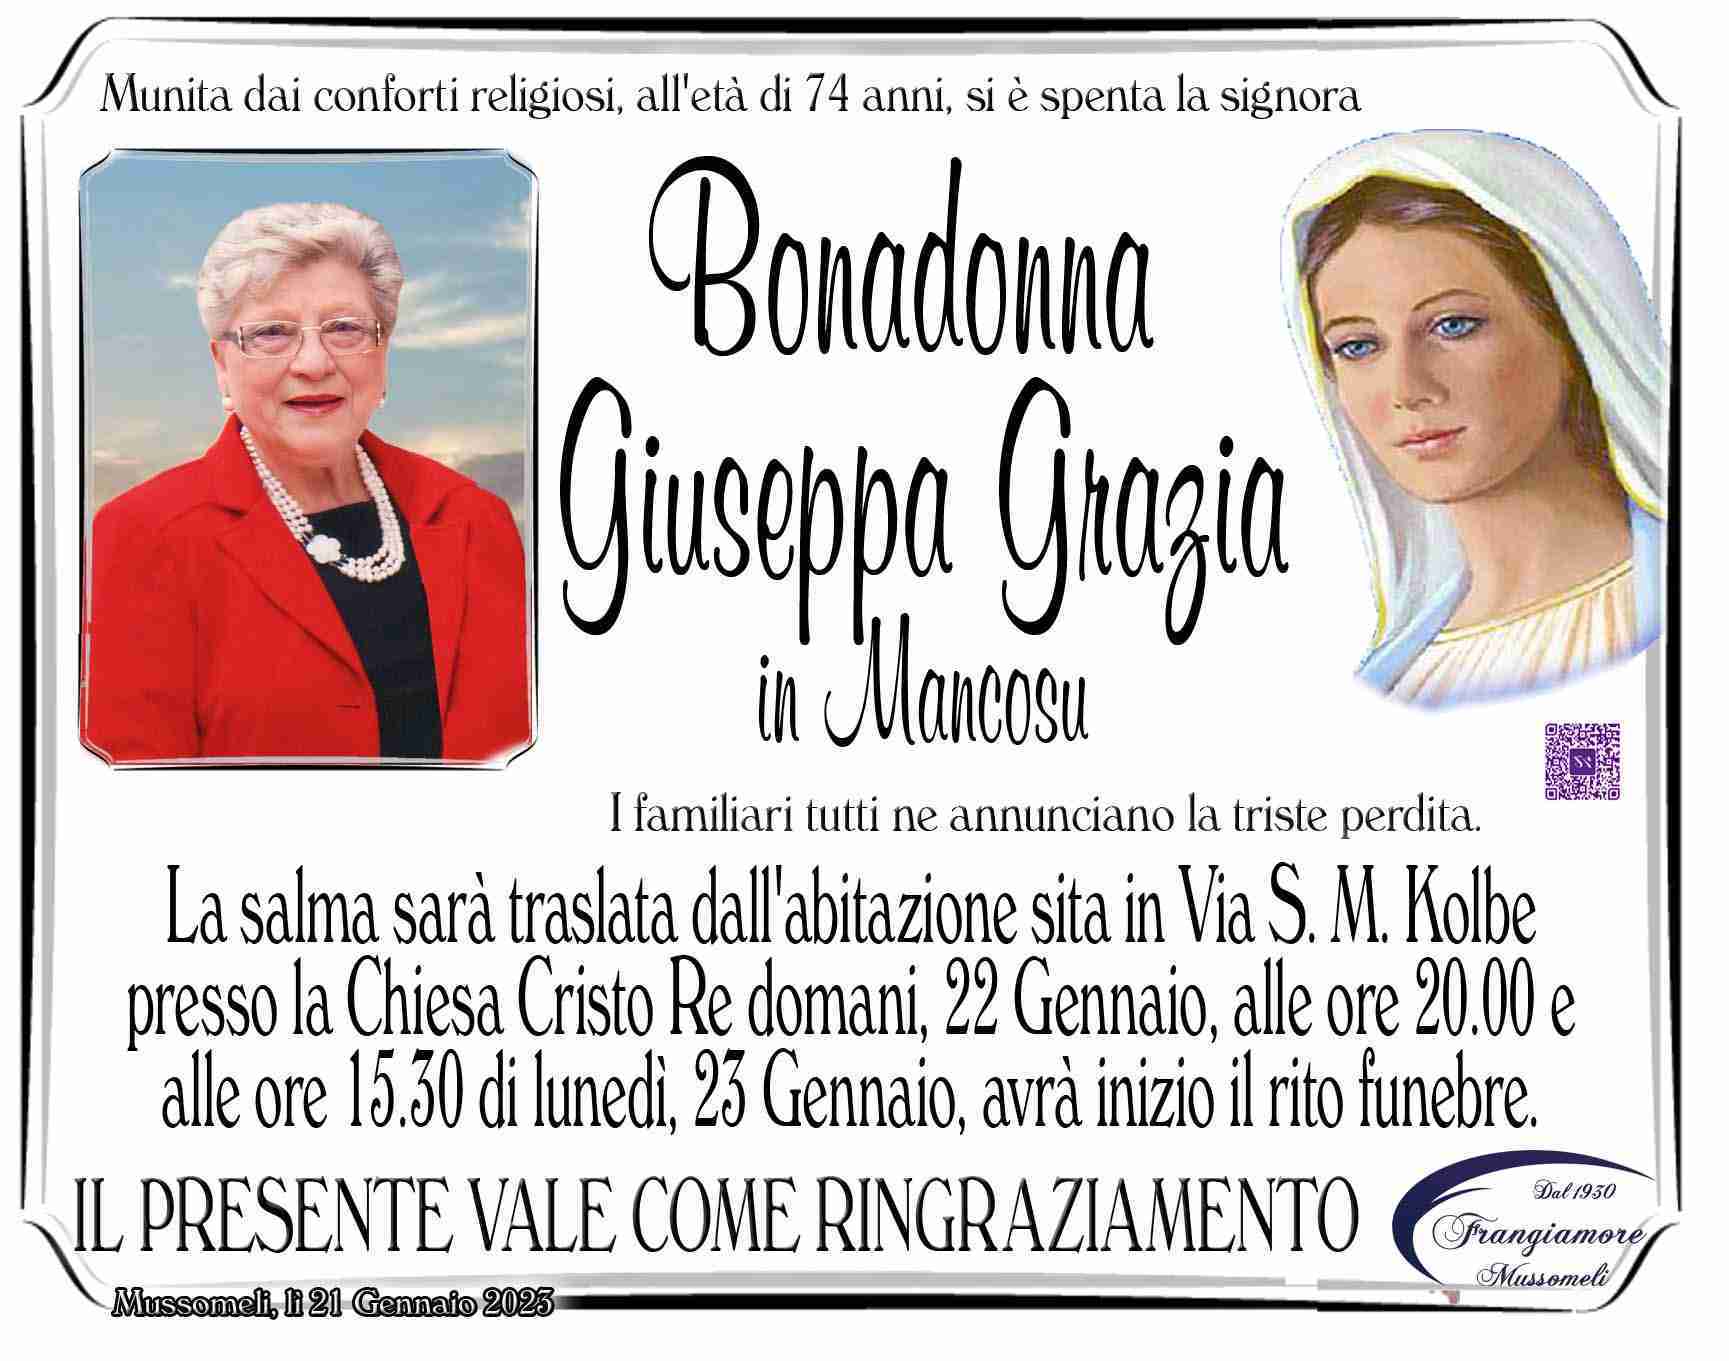 Giuseppa Grazia Bonadonna